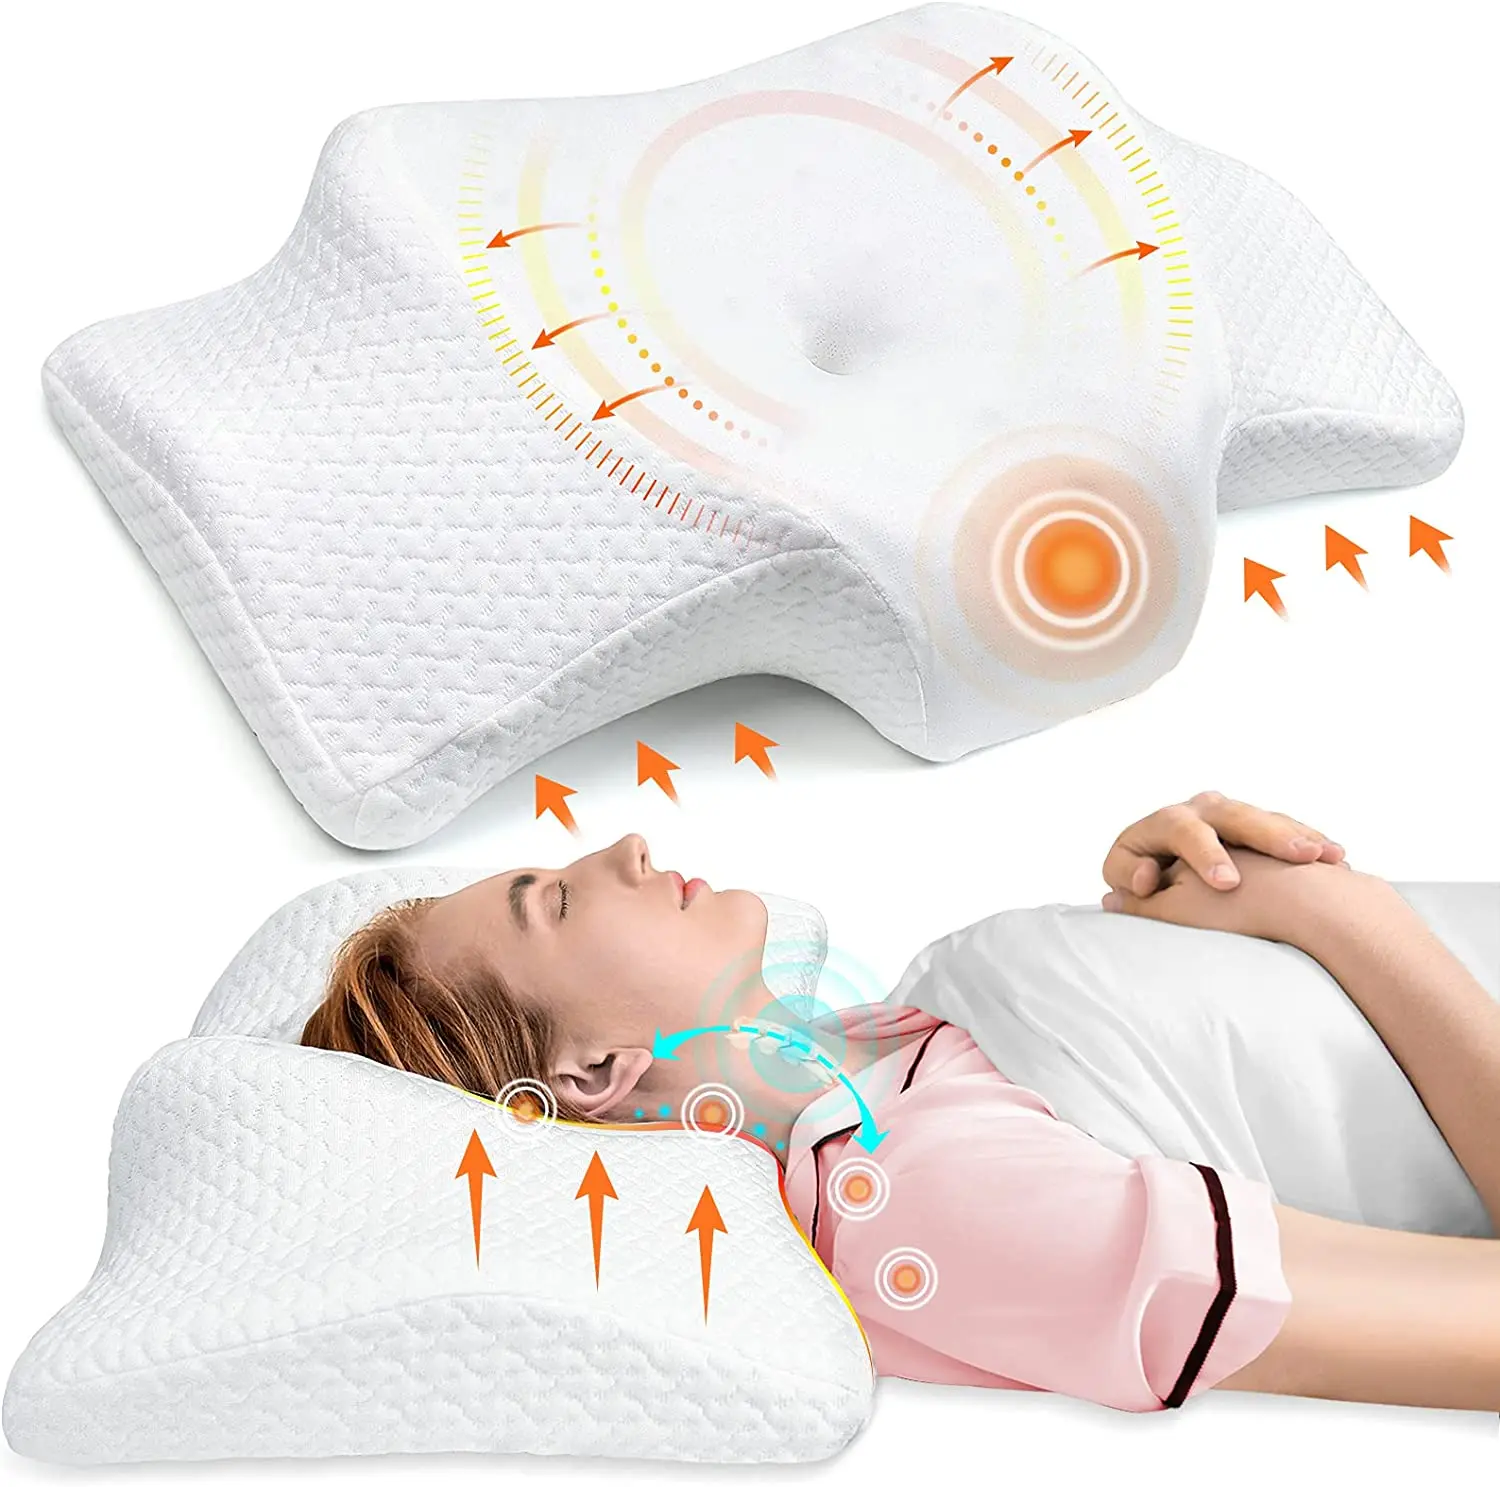 

Pulatree Orthopedic Support Pillows Sleeping Odorless Contour Cervical Pillows For Neck Pain Ergonomic Memory Foam Neck Pillow